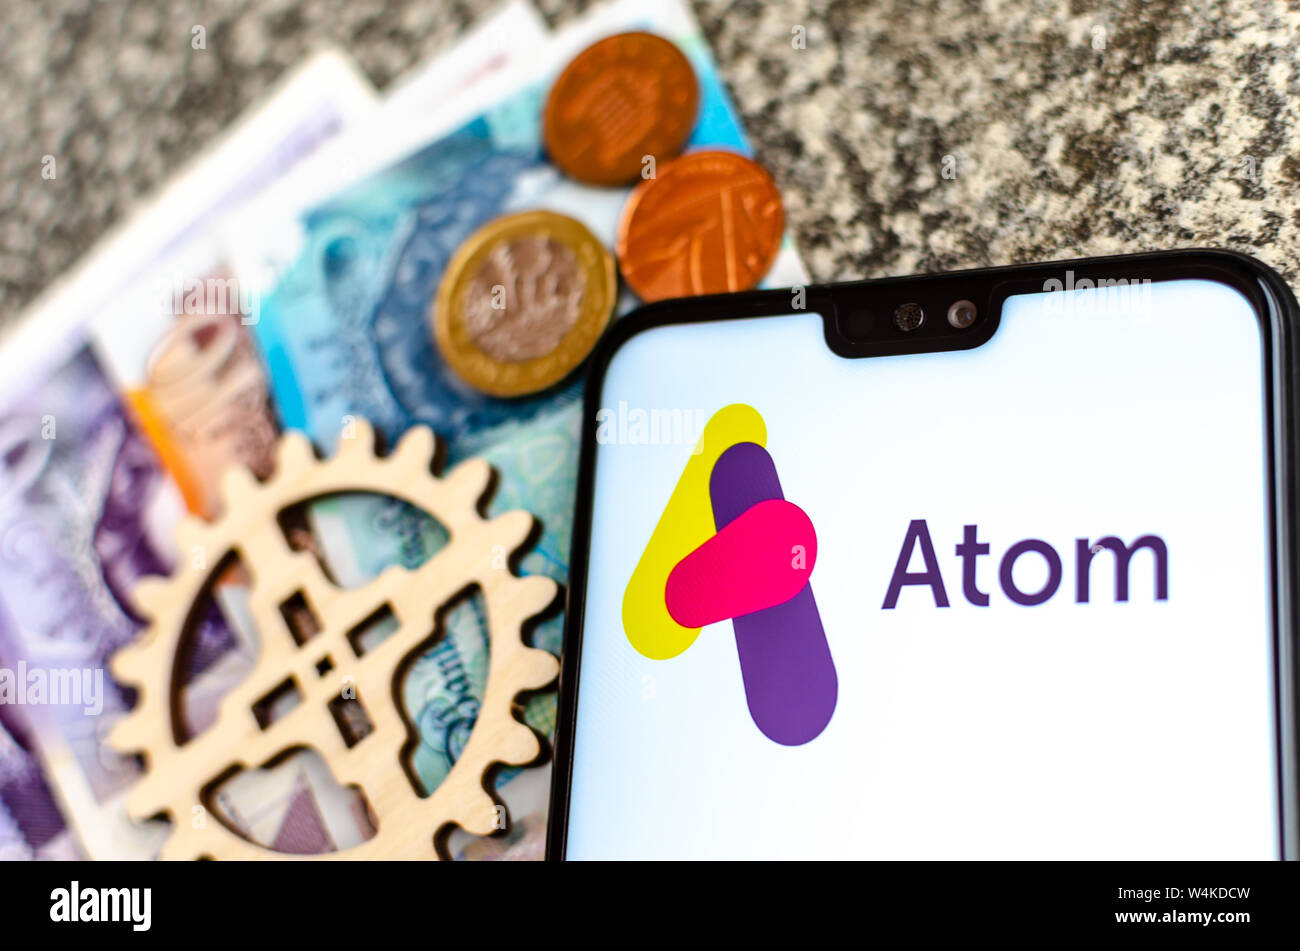 Atom bank logo on the smartphone screen Stock Photo